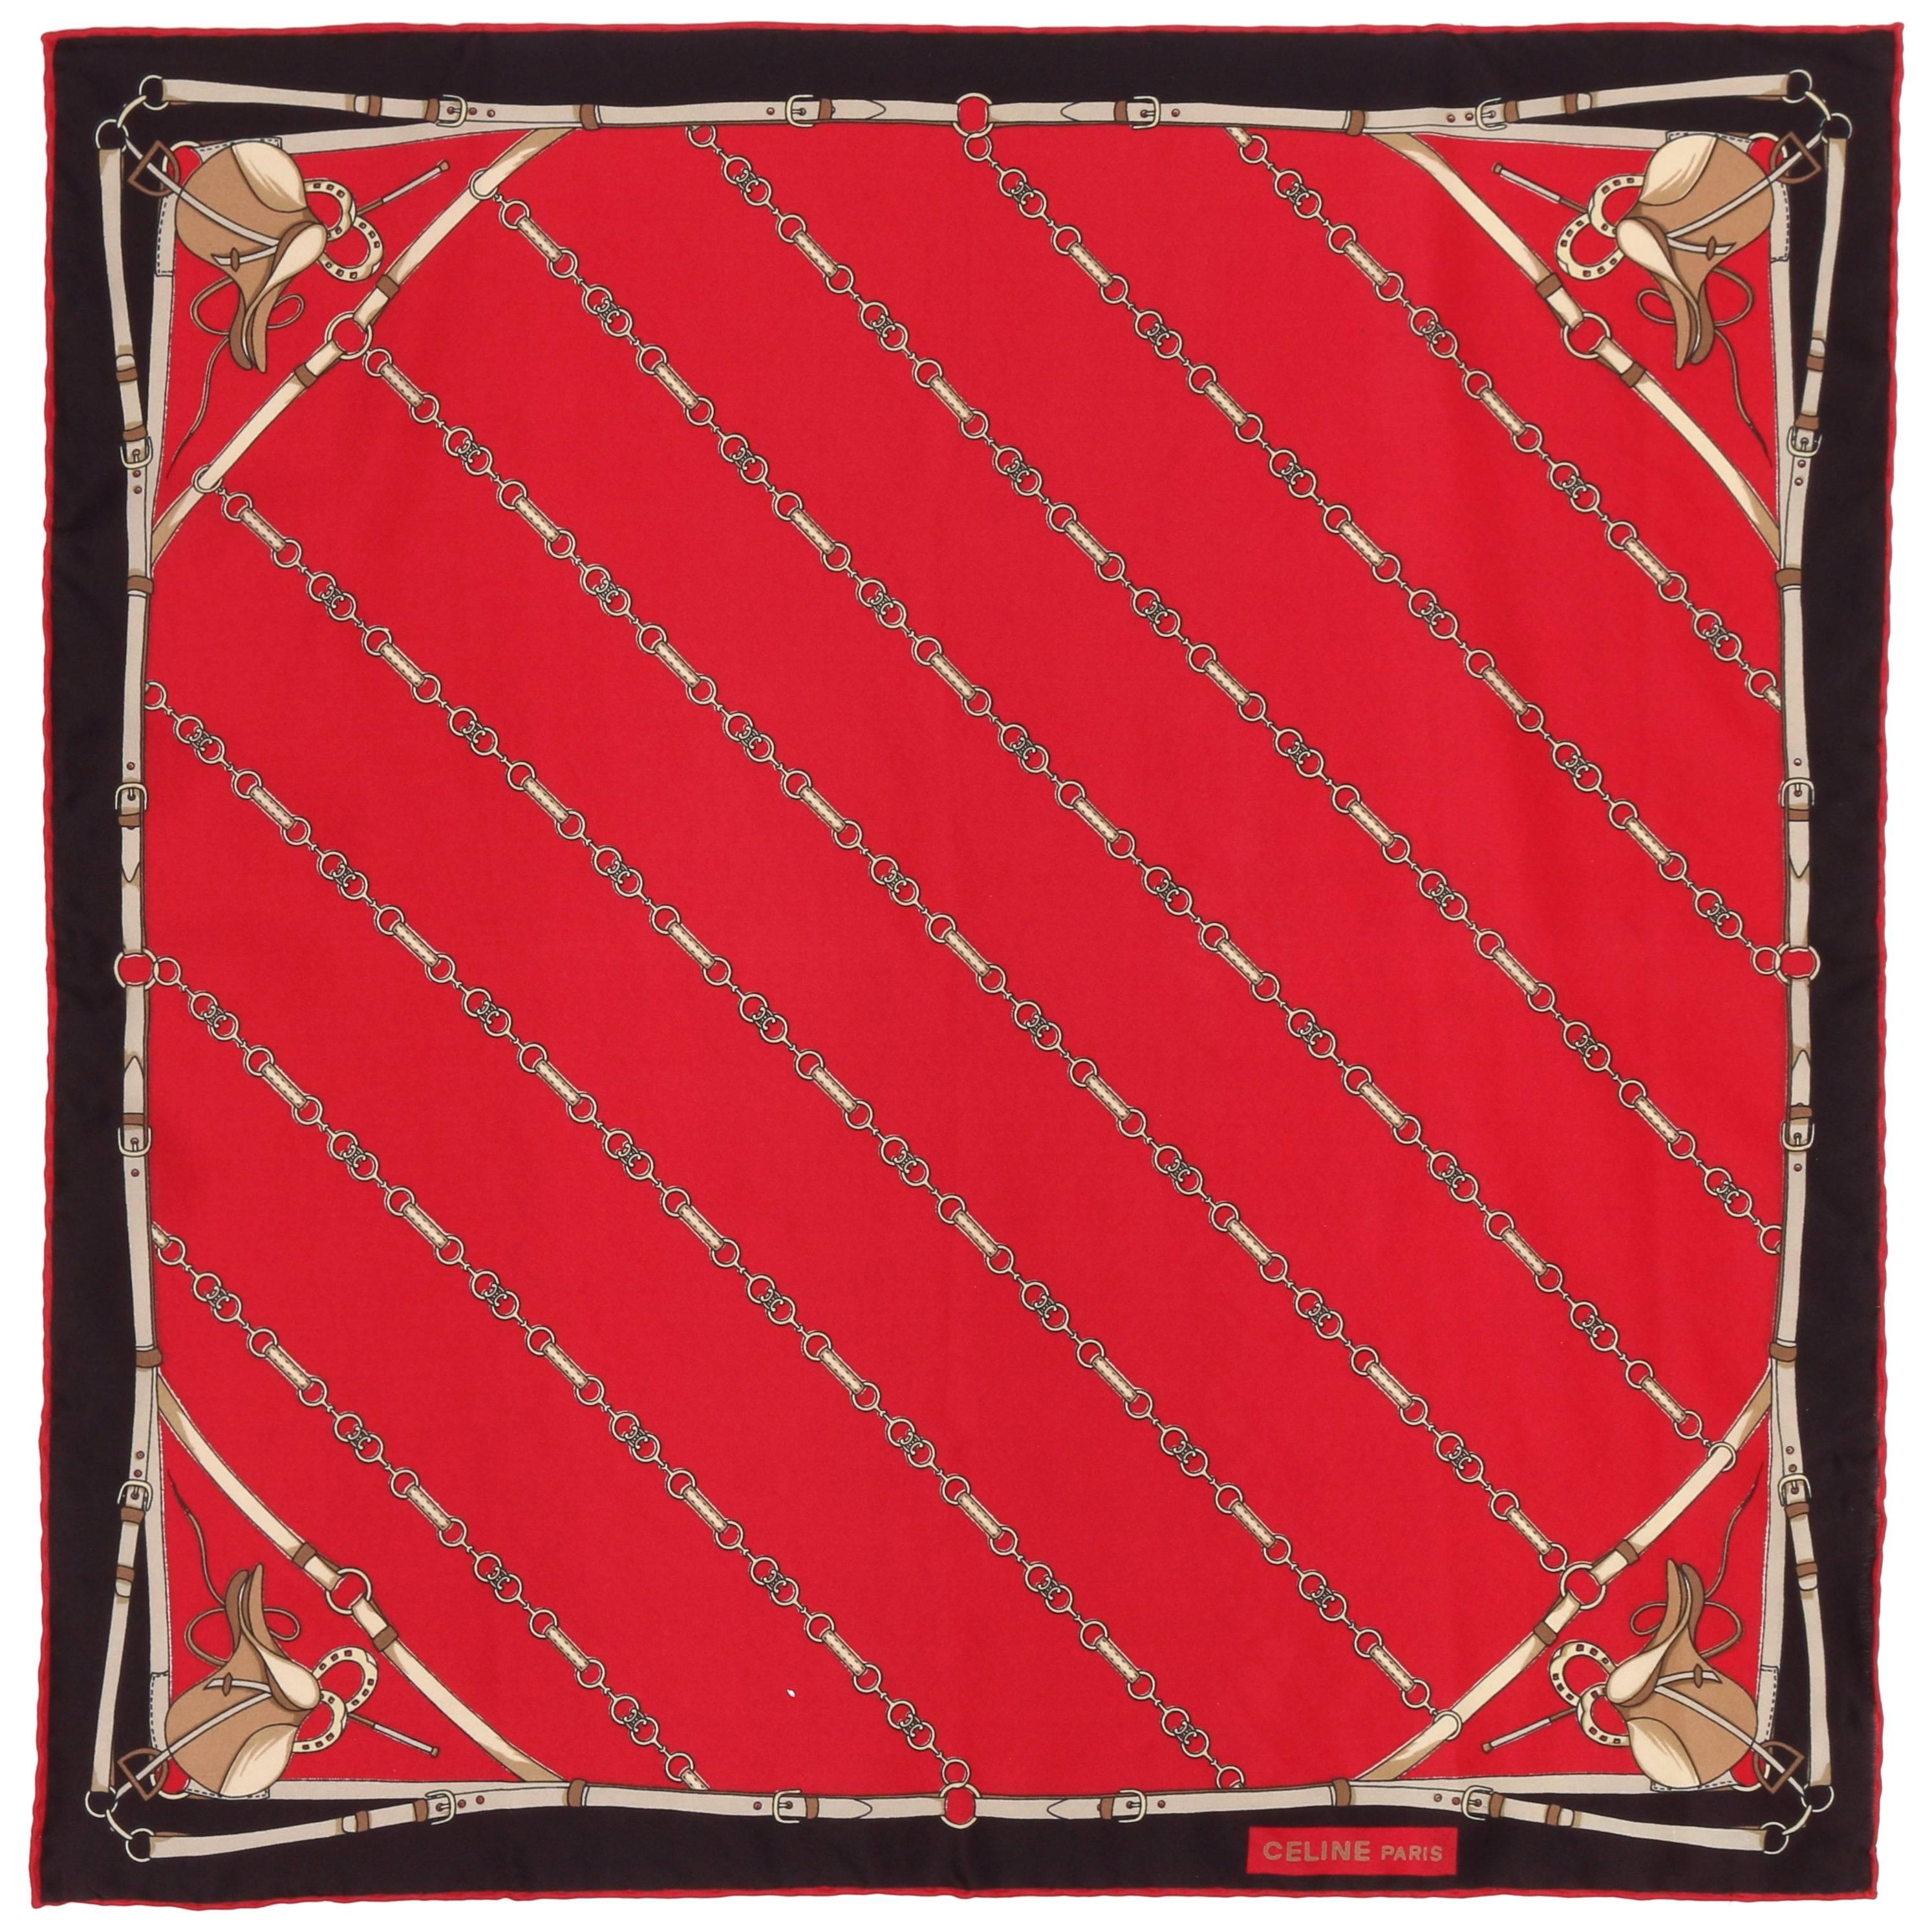 CELINE Red and Black Equestrian Horsebit Print Silk Scarf